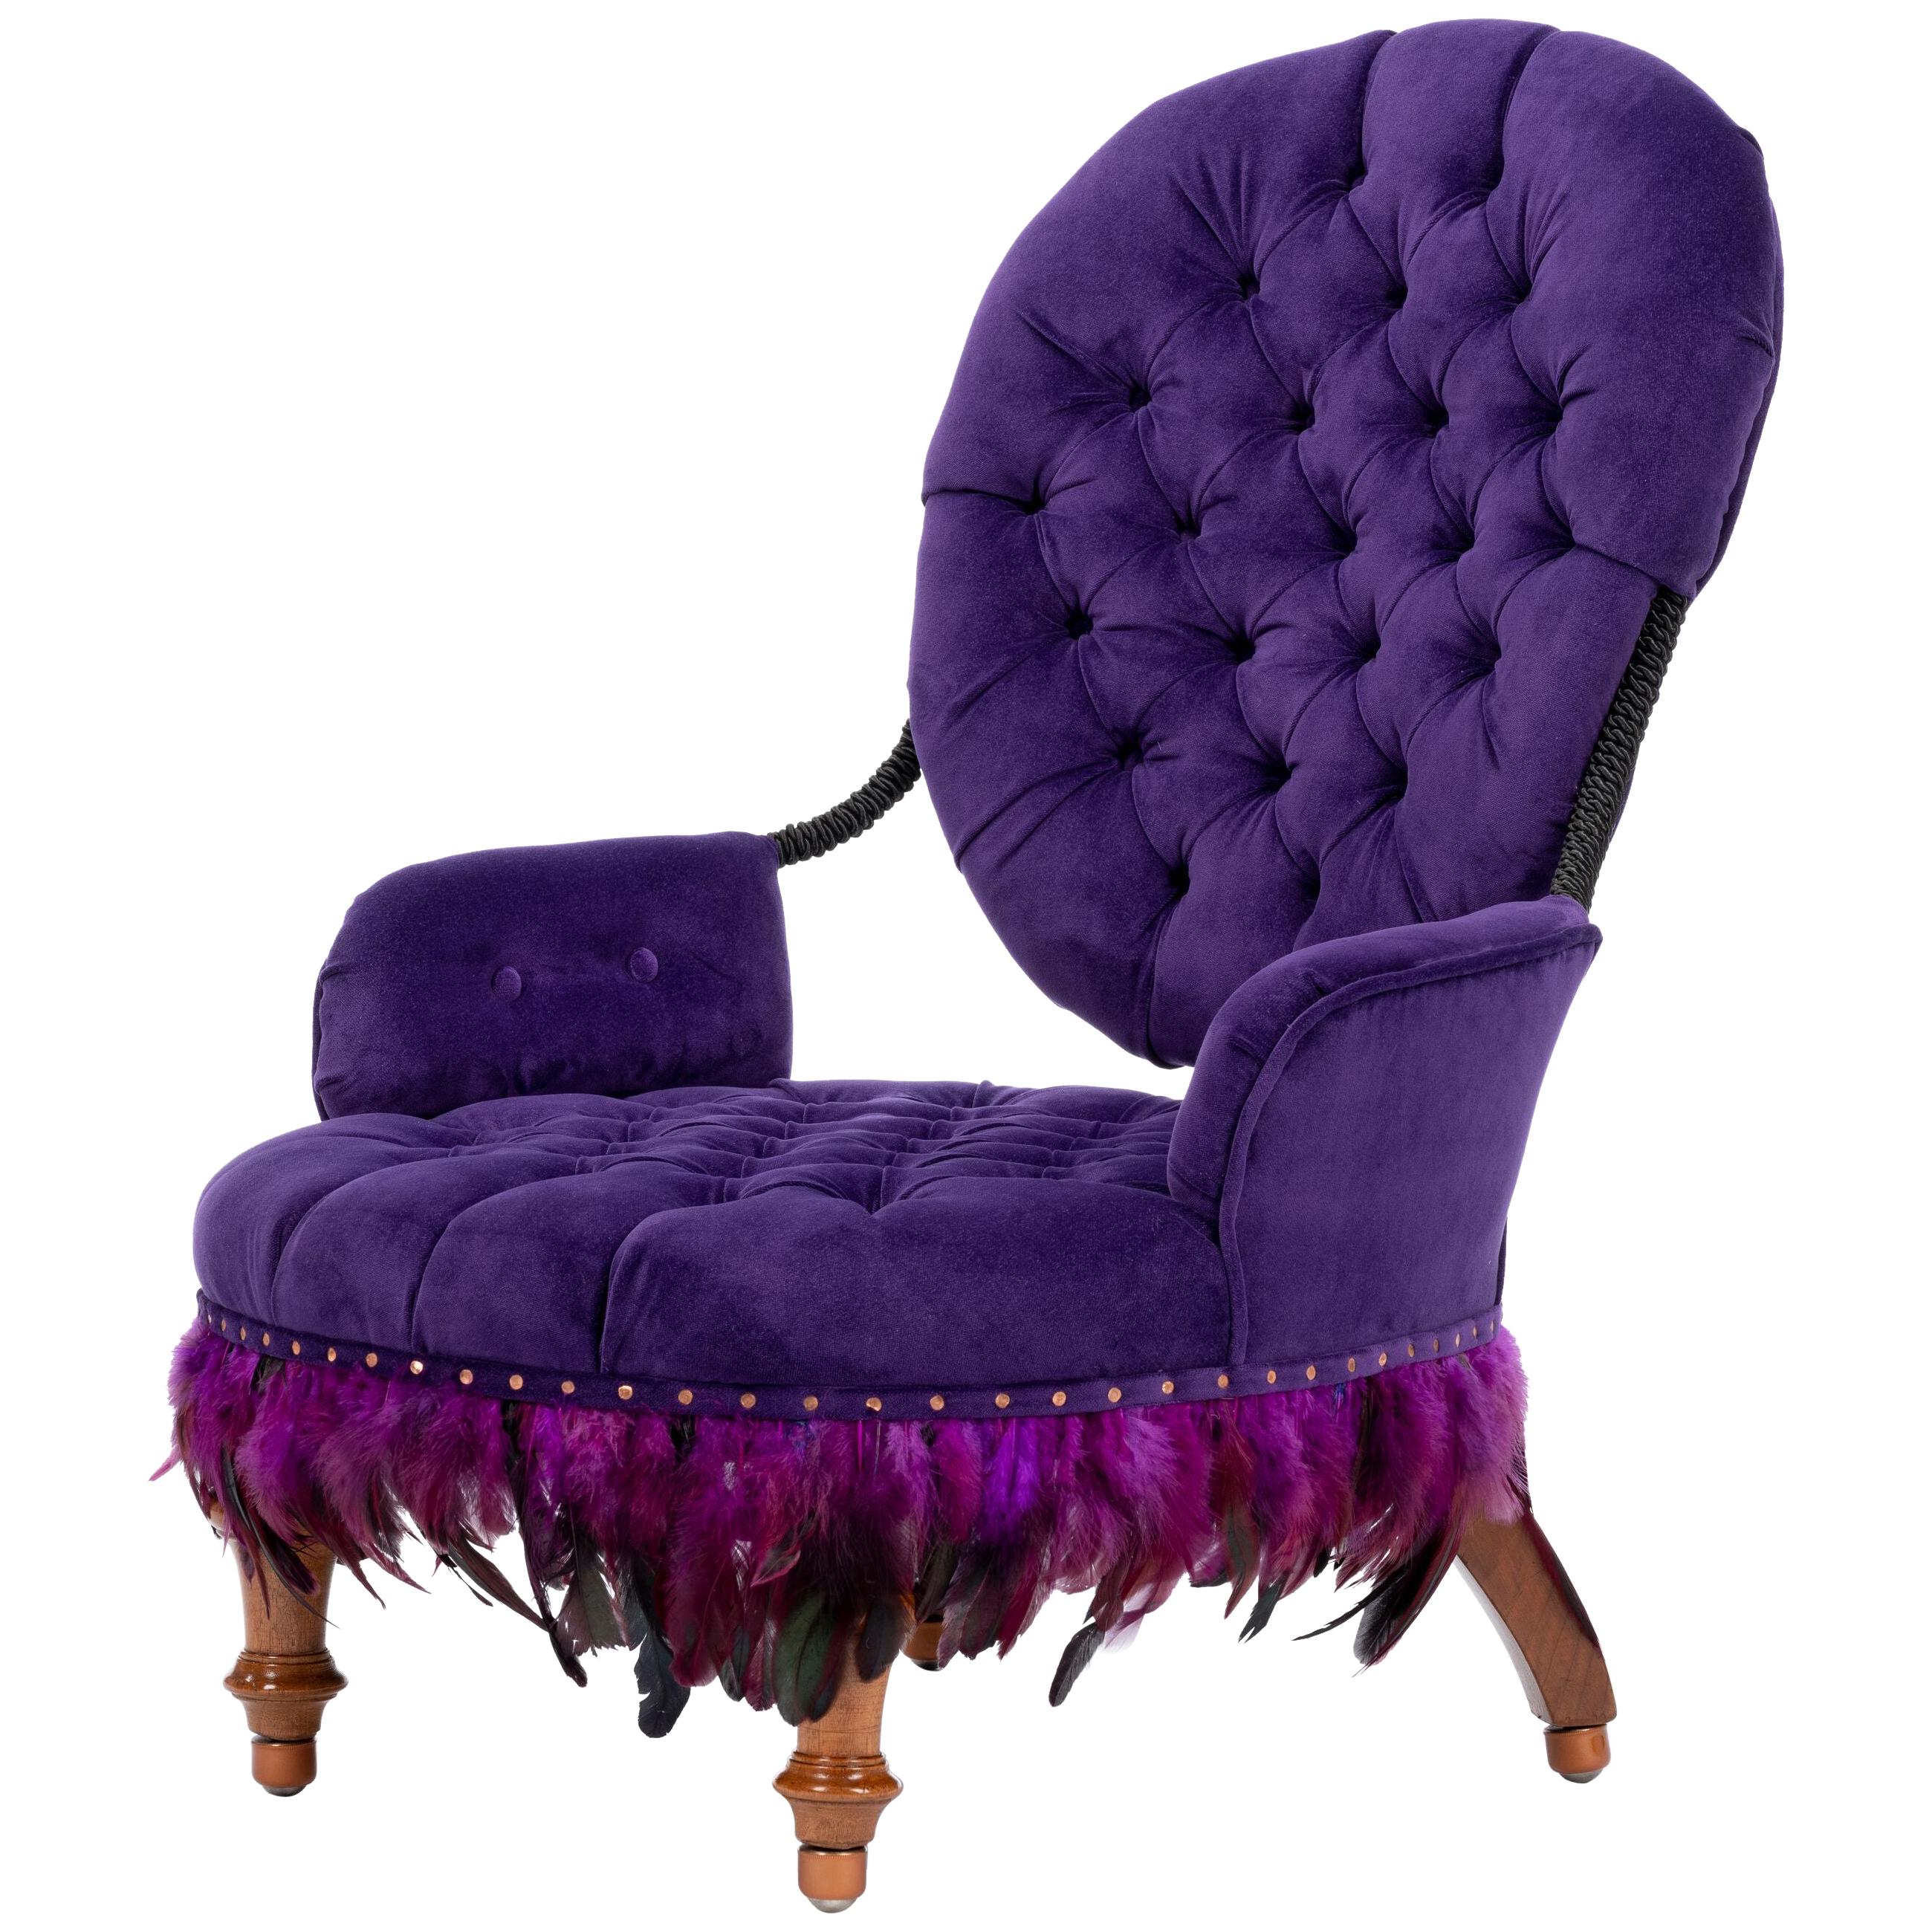 Antique Salon Chair Purple Reign Burlesque Chair, France, circa 1875